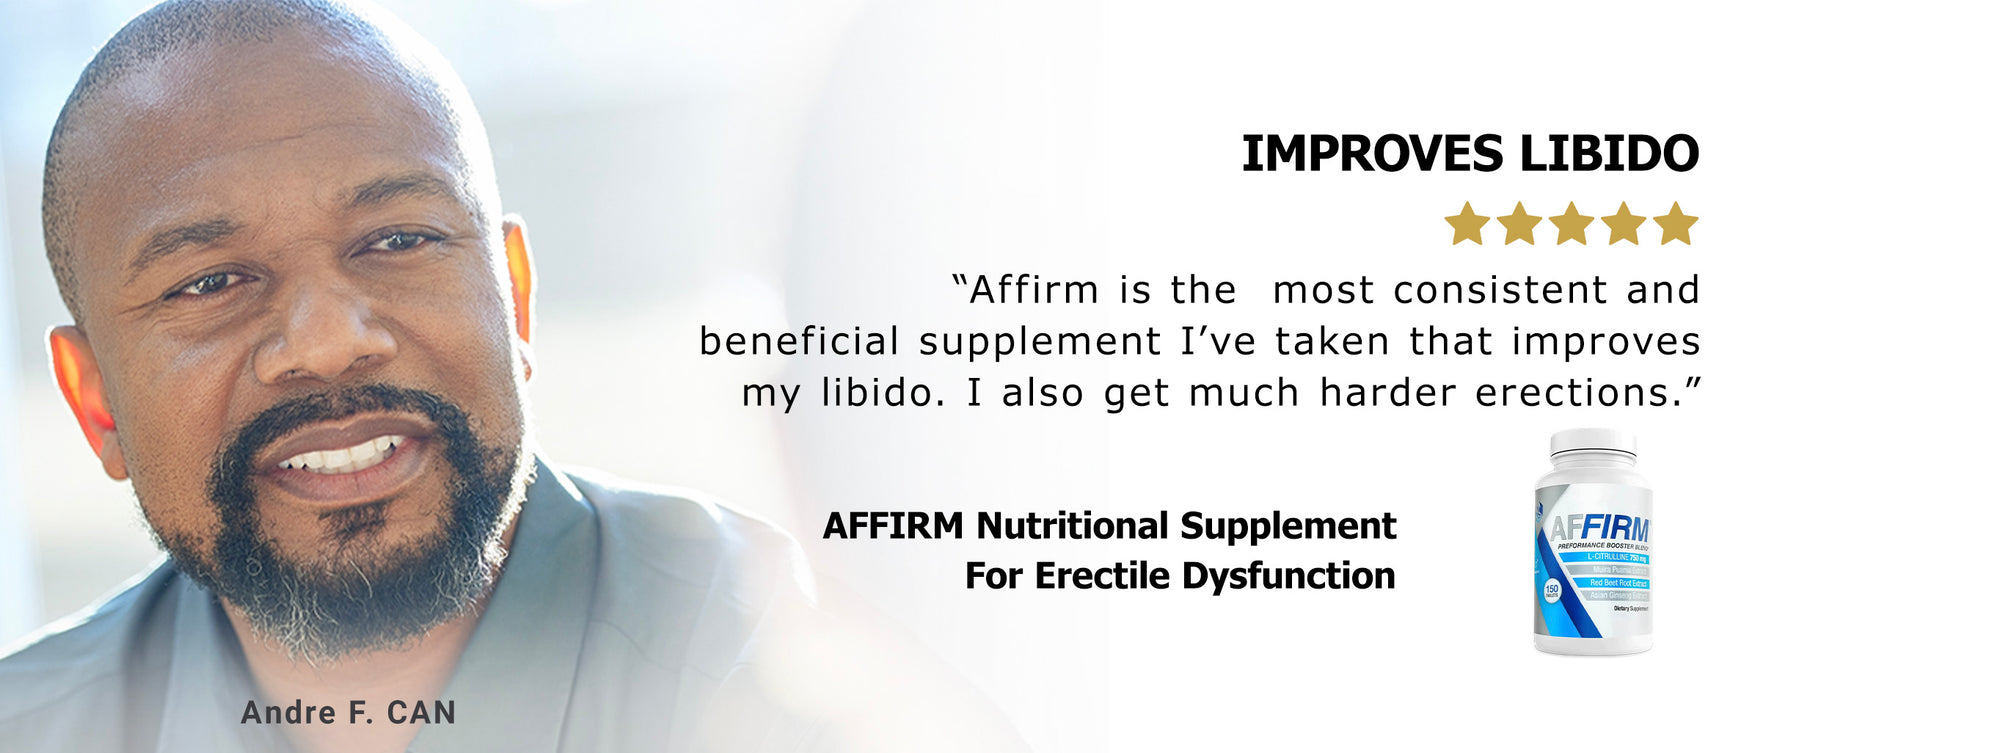 Testimonial Rating for Affirm Nutritional Supplement Desktop